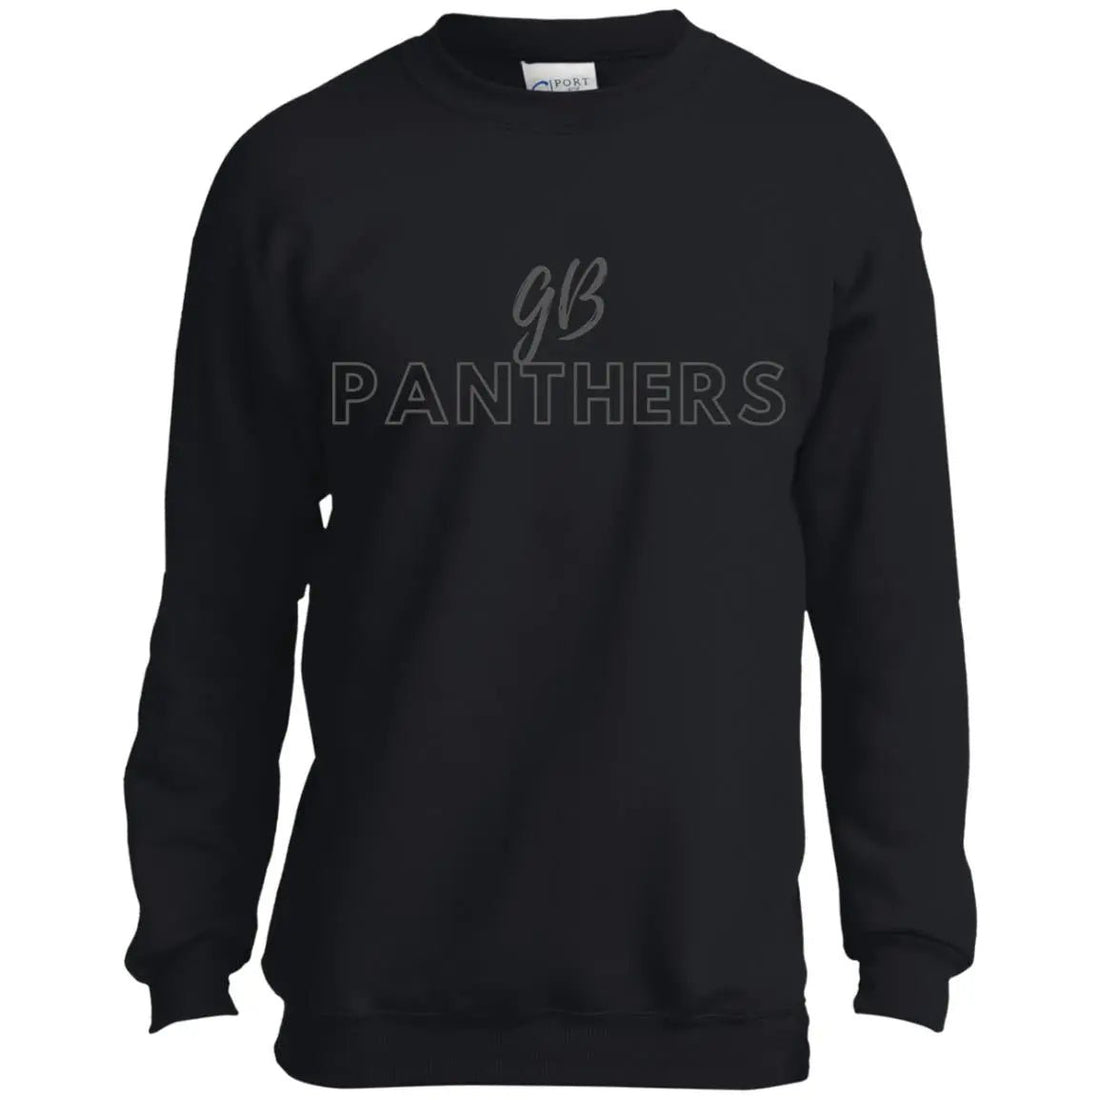 GB Panthers Youth Crewneck Sweatshirt - Sweatshirts - Positively Sassy - GB Panthers Youth Crewneck Sweatshirt